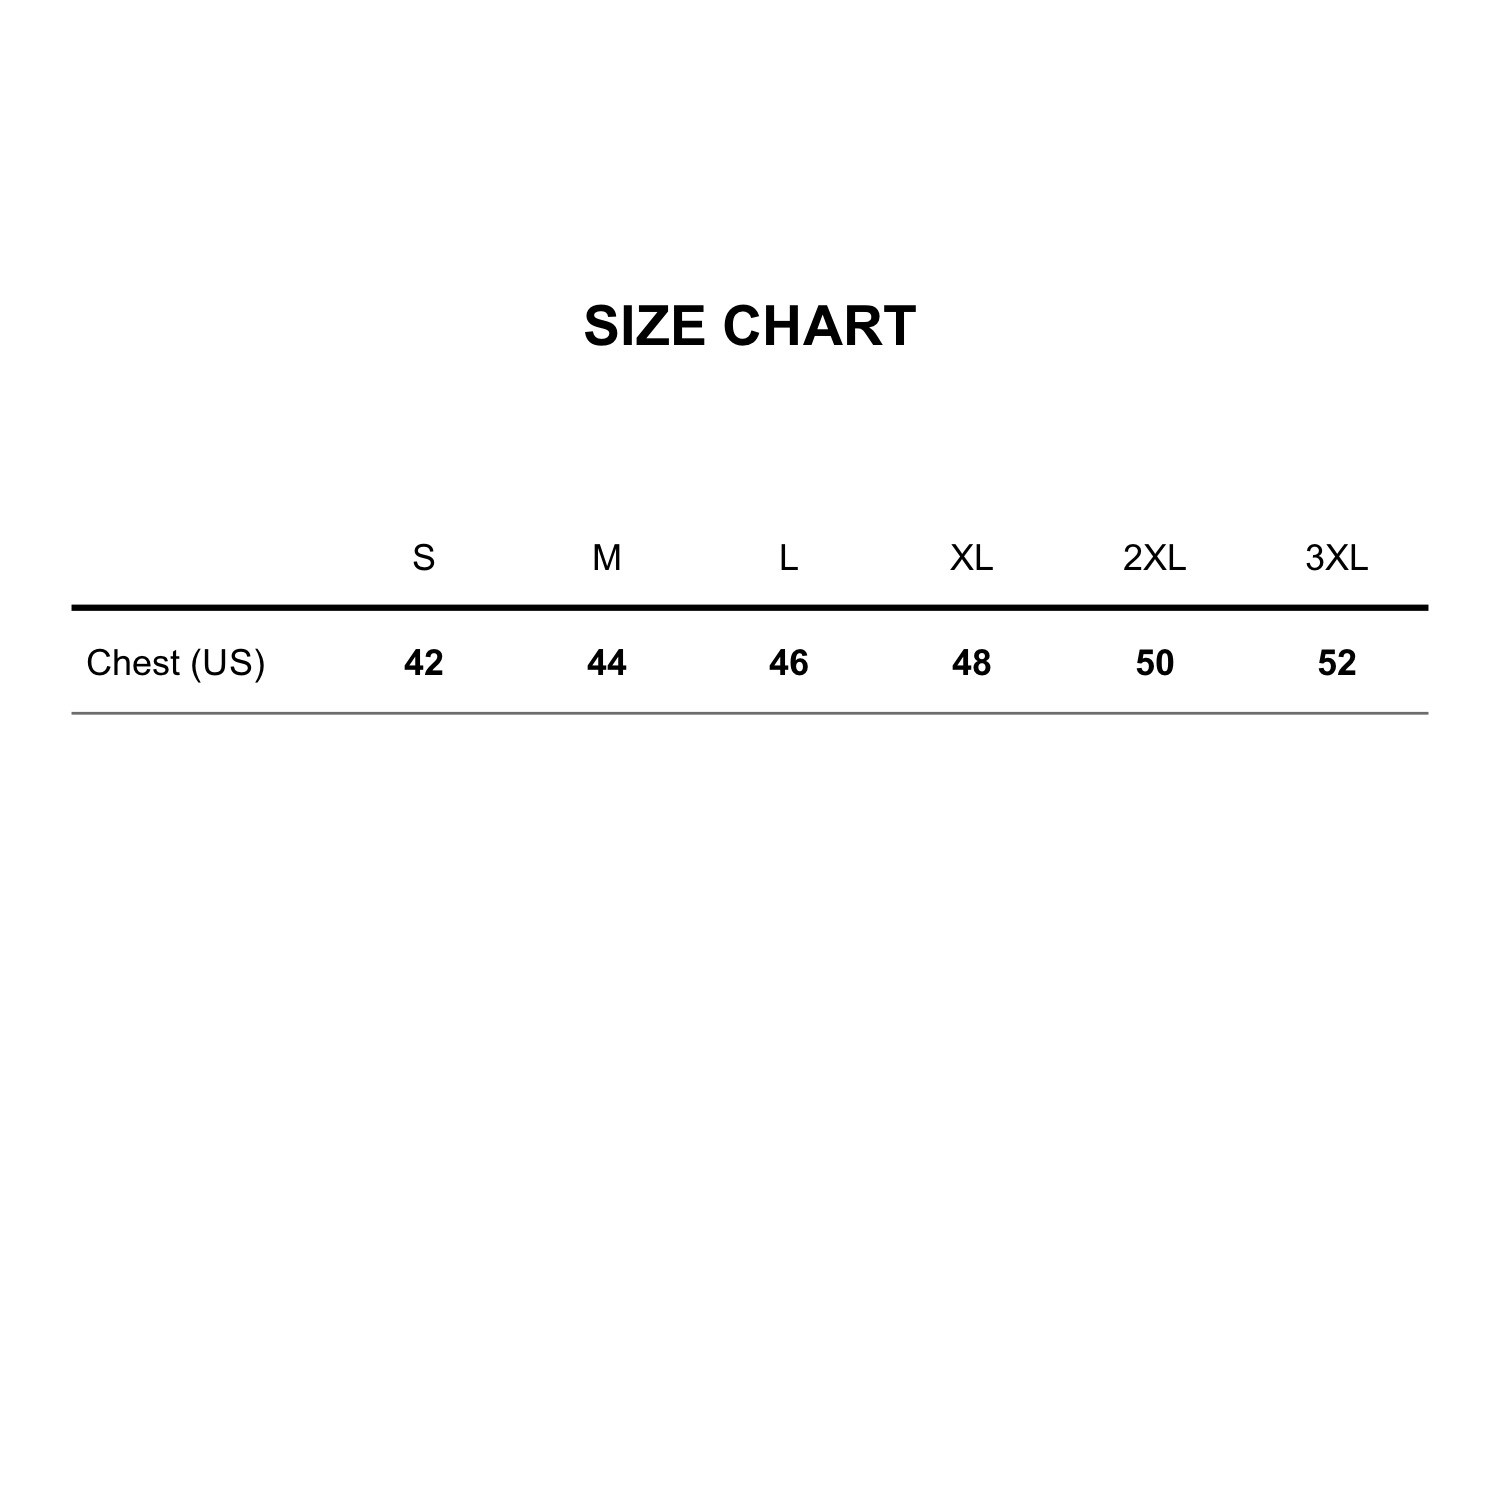 Sir Raymond Tailor Size Chart